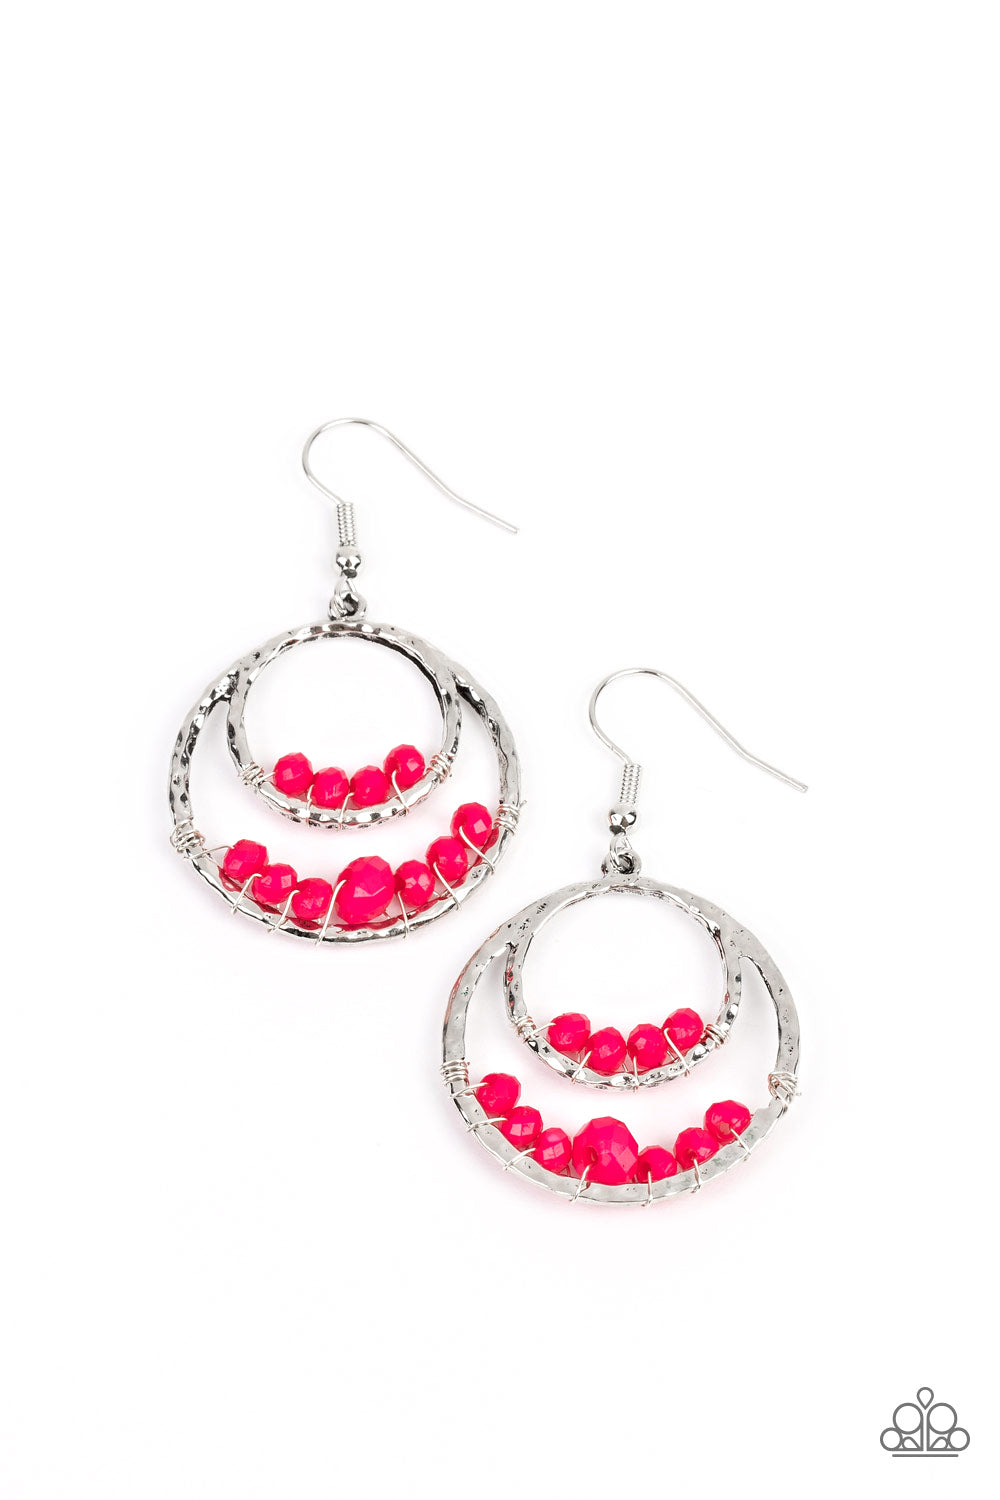 Paparazzi Bustling Beads - Pink Earrings